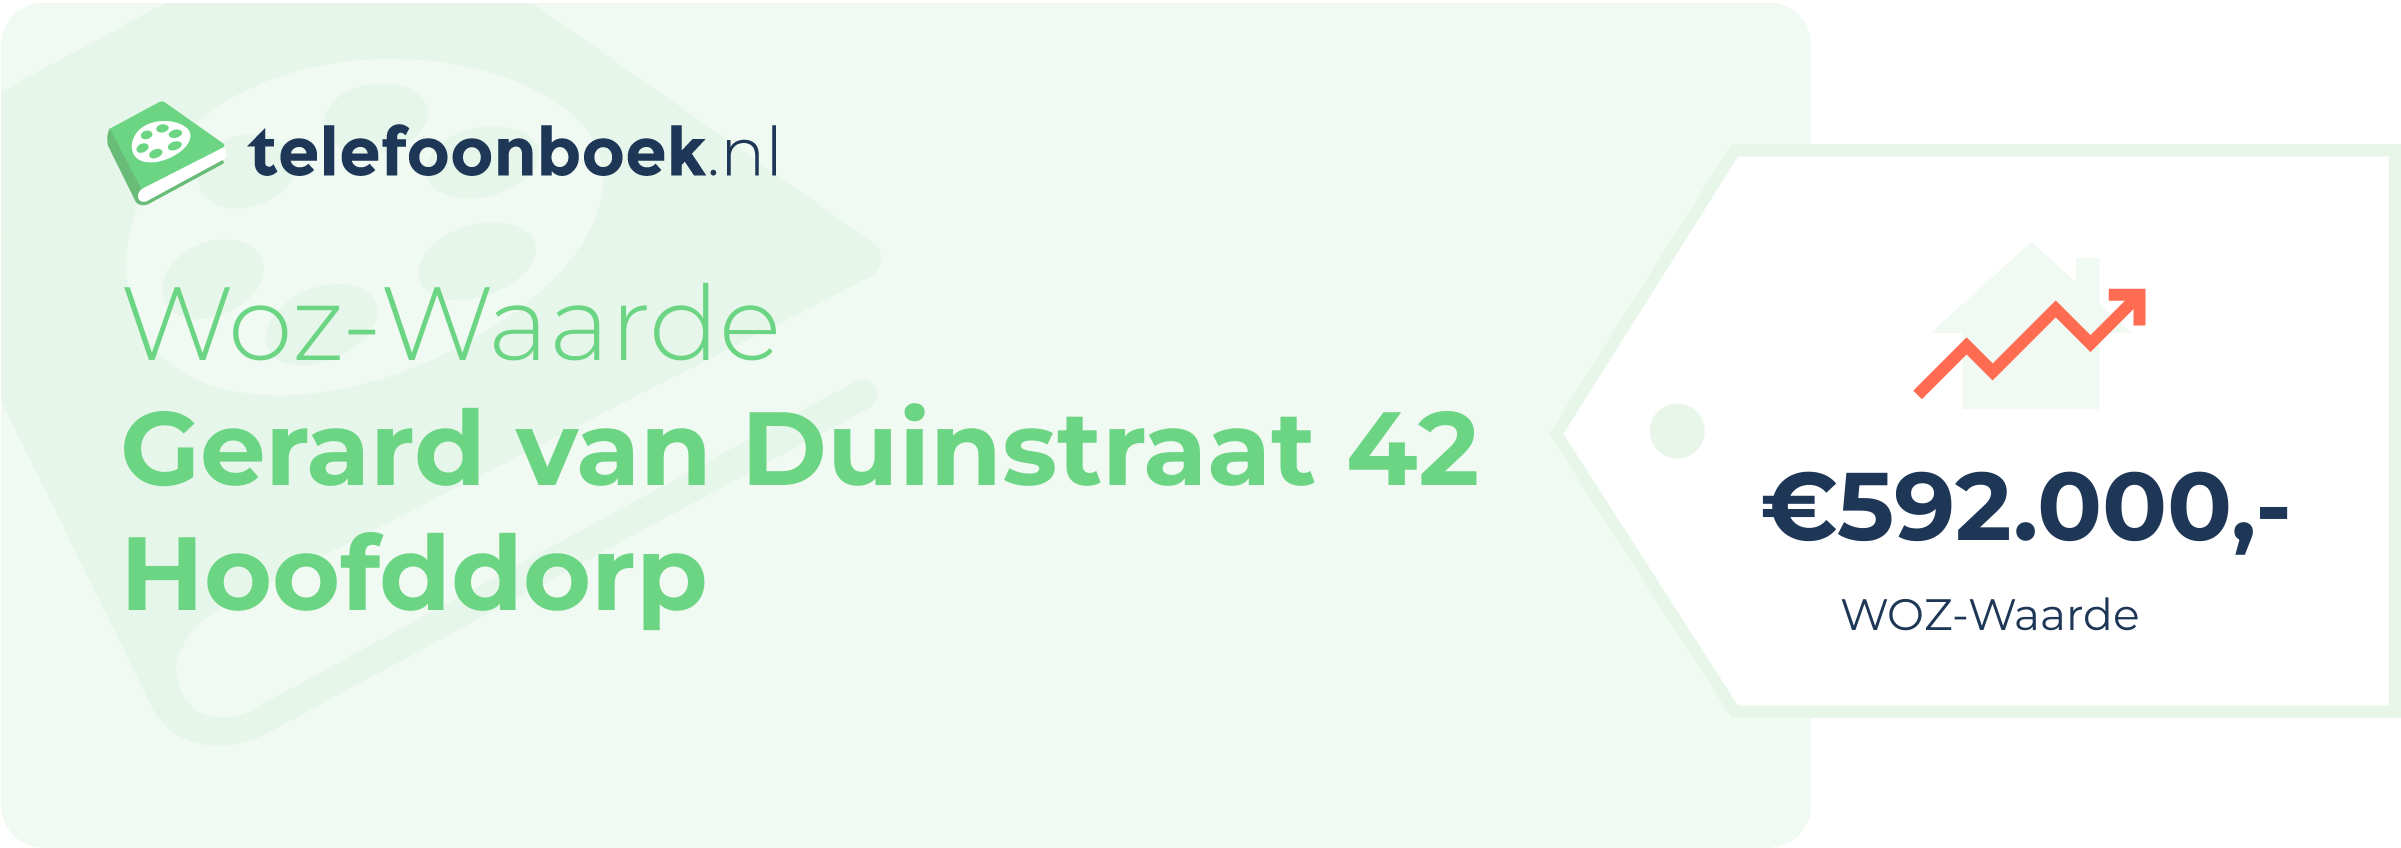 WOZ-waarde Gerard Van Duinstraat 42 Hoofddorp